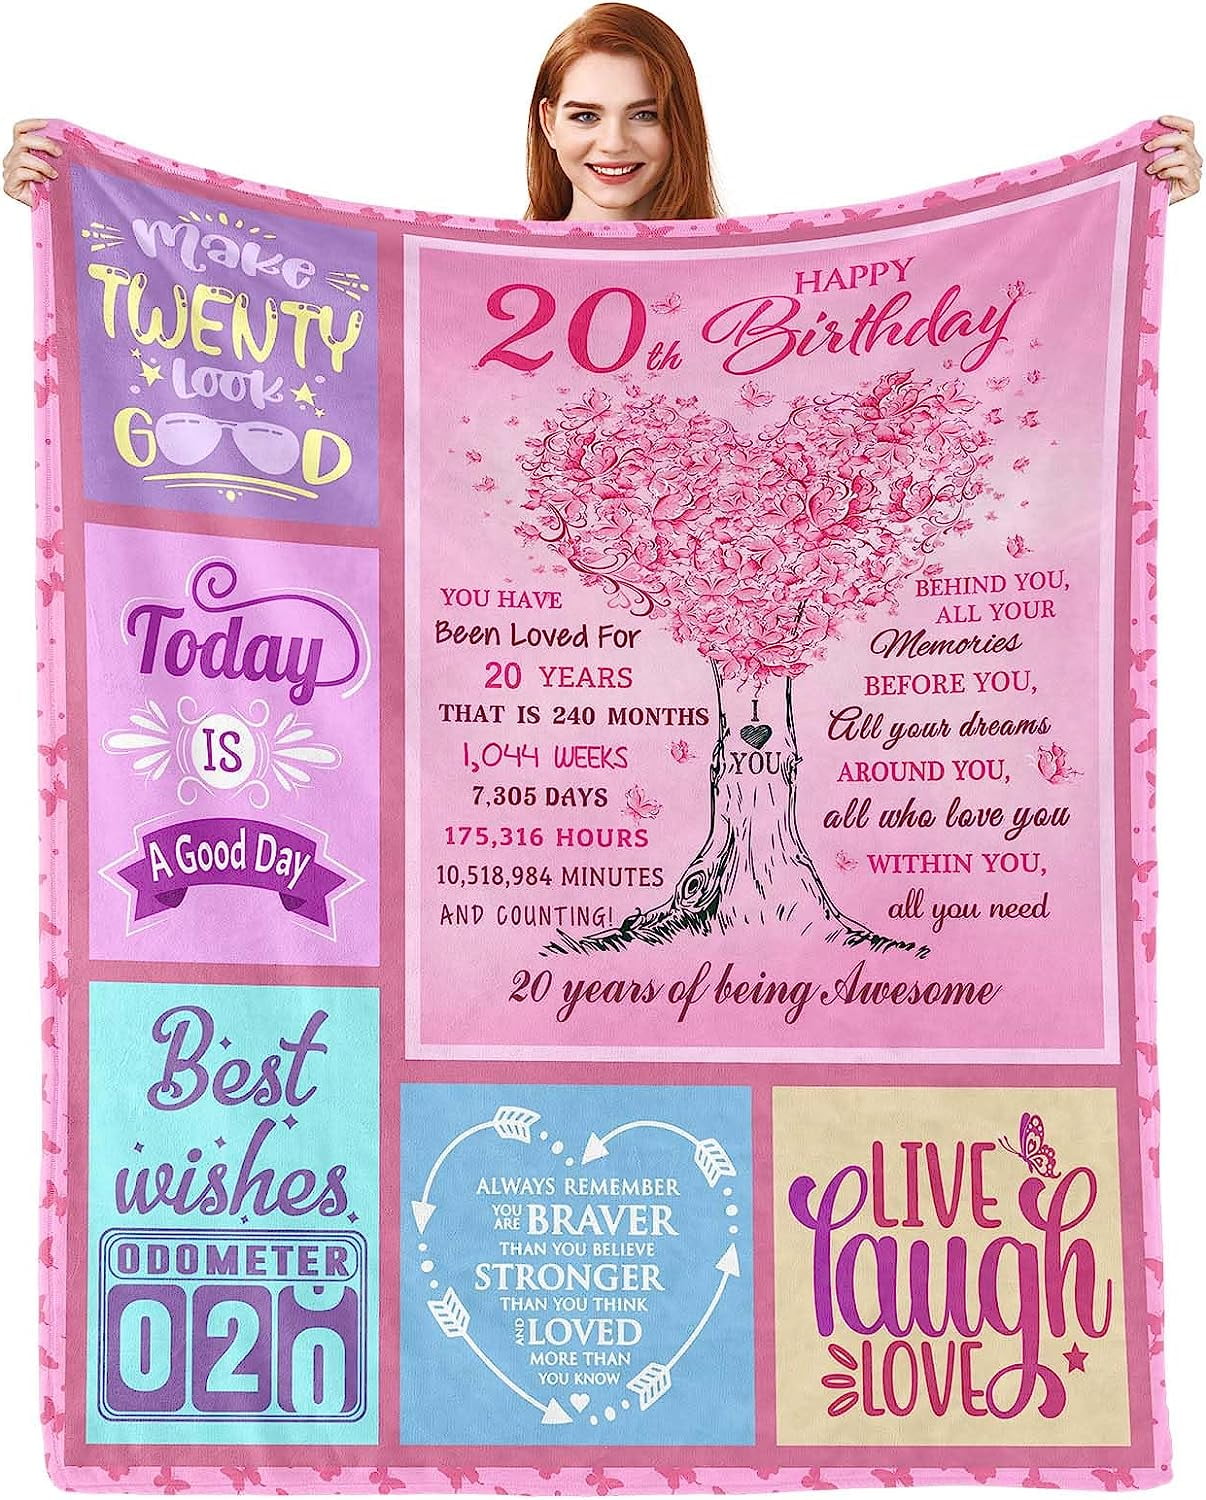 RooRuns 14 Year Old Girl Birthday Gift Ideas Blanket, Birthday